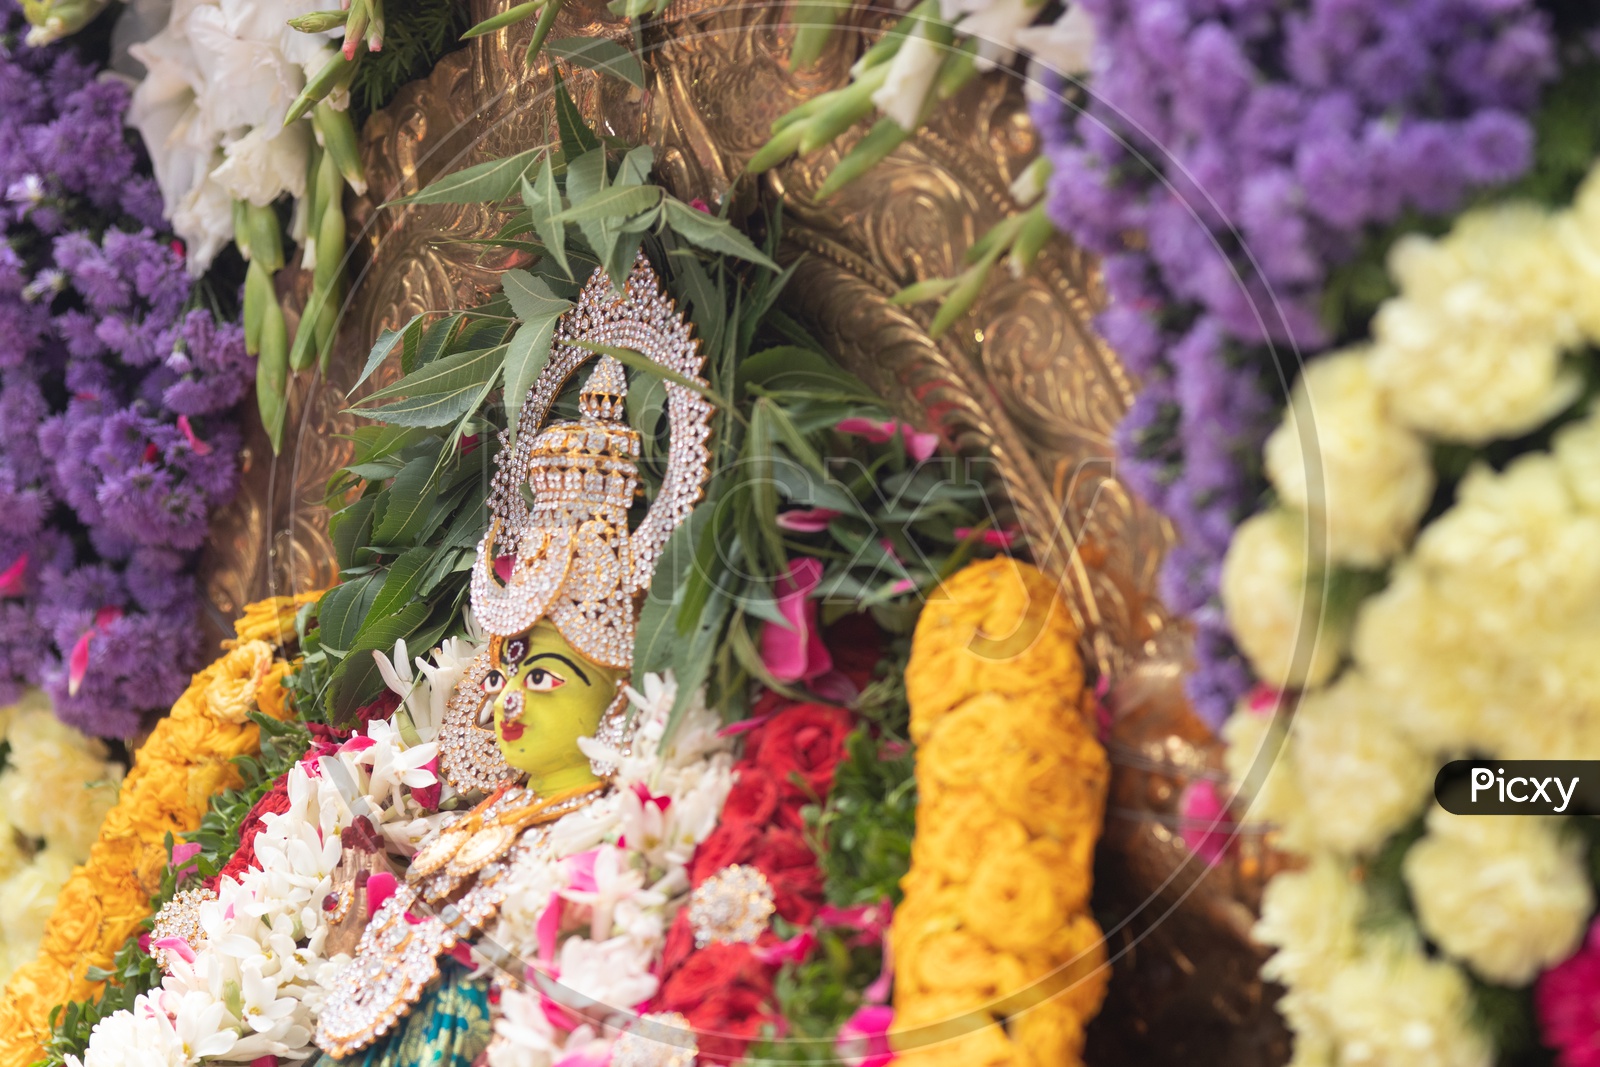 Hindu Goddess Idol In Procession During Bonalu Celebrations At Ujjaini Mahakali Temple